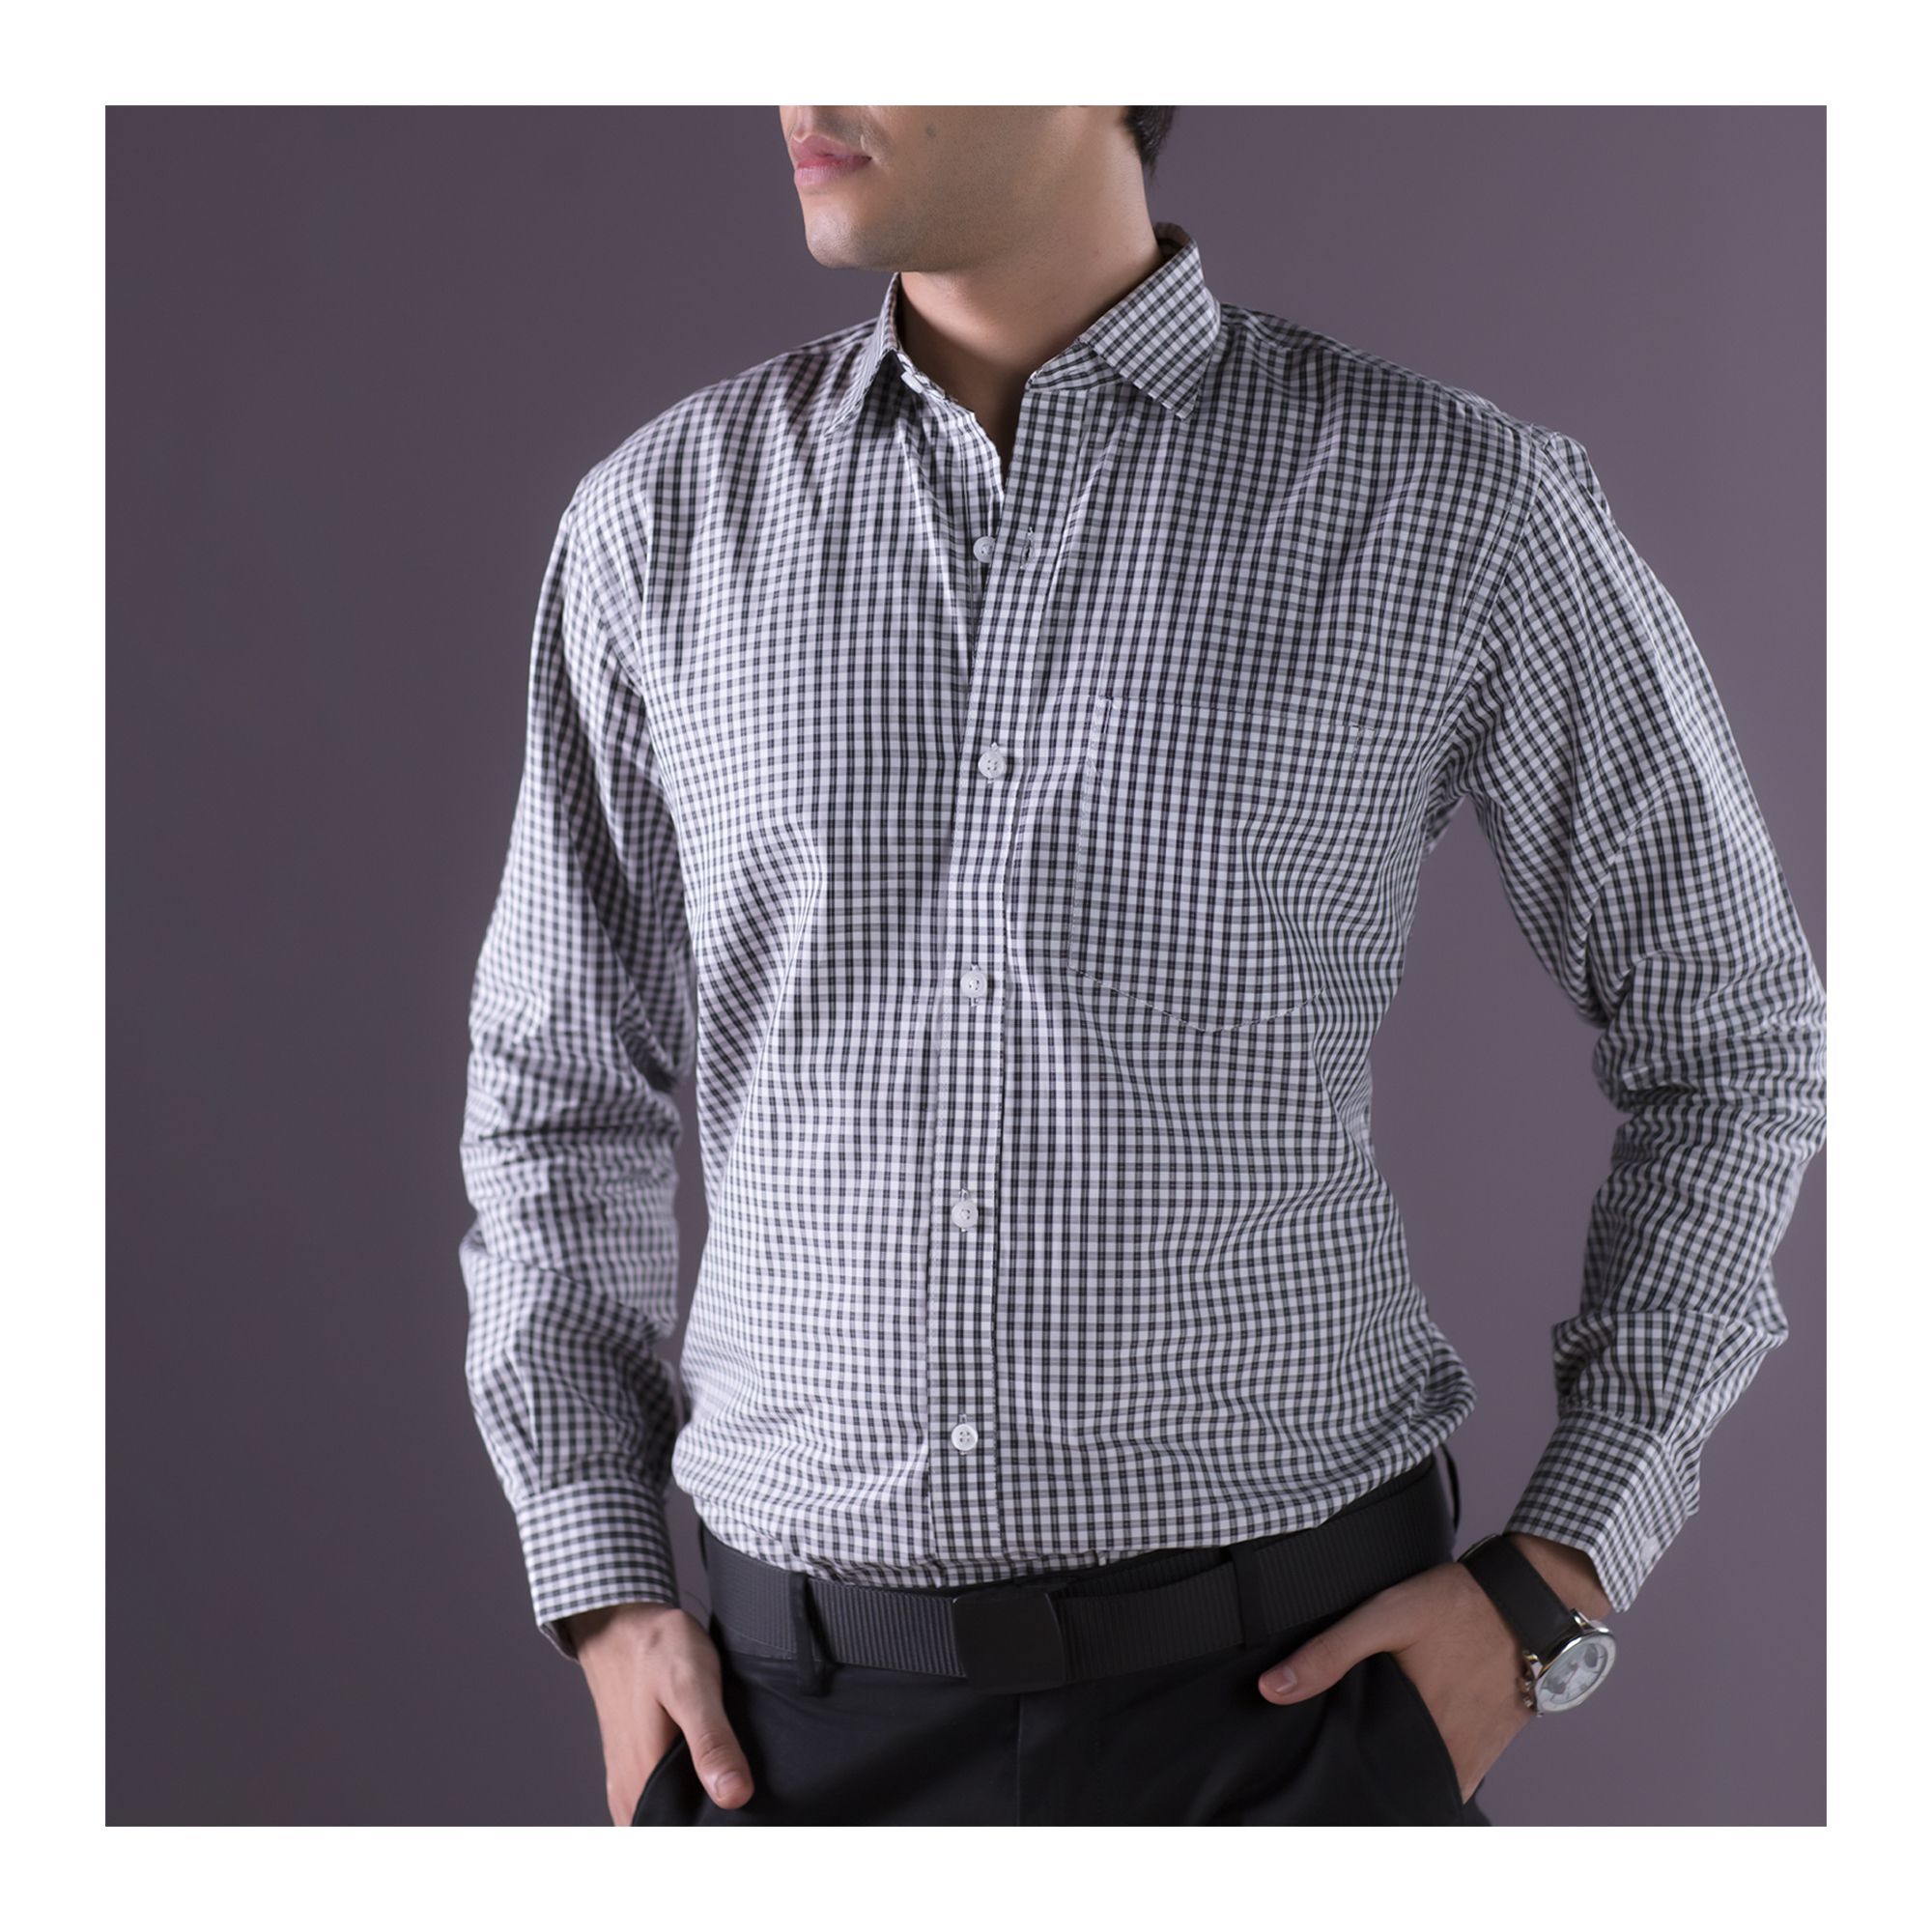 Buy Basix Men's Small Check Shirt, Black & White, MFS-107 Online